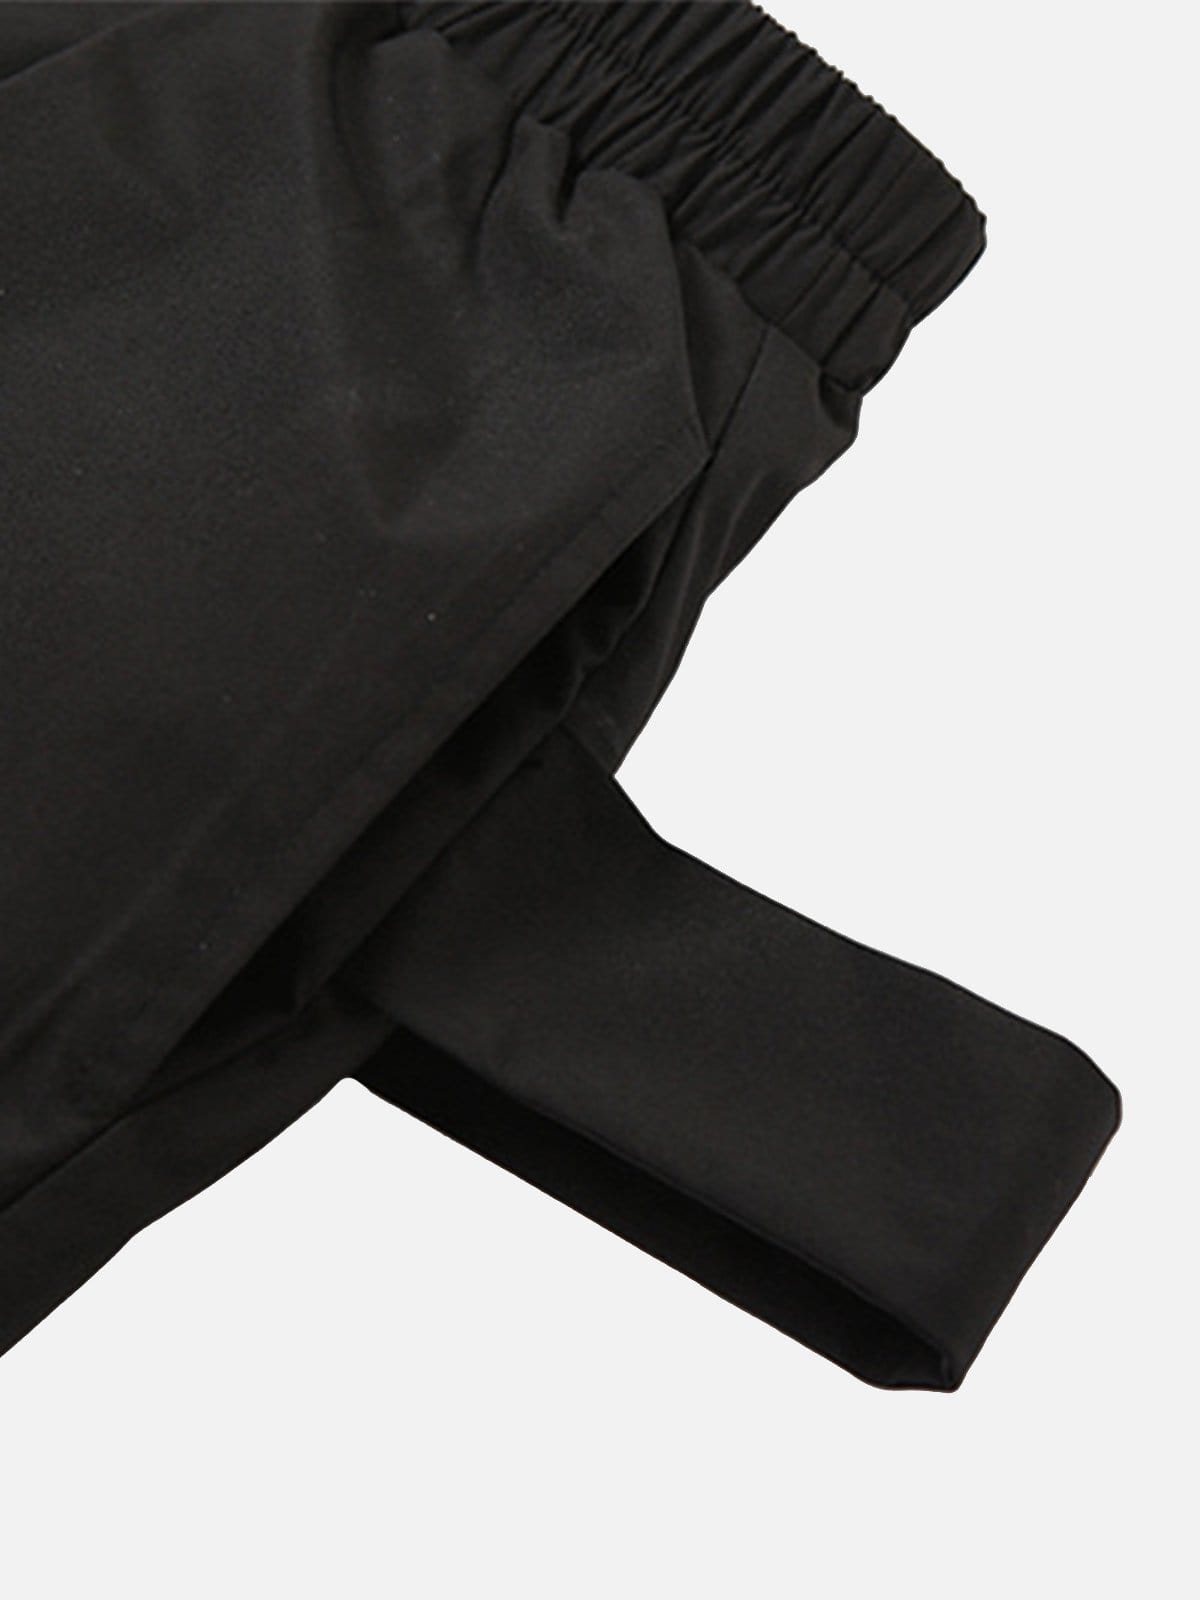 NEV High-Waisted Pleated Panel Pants